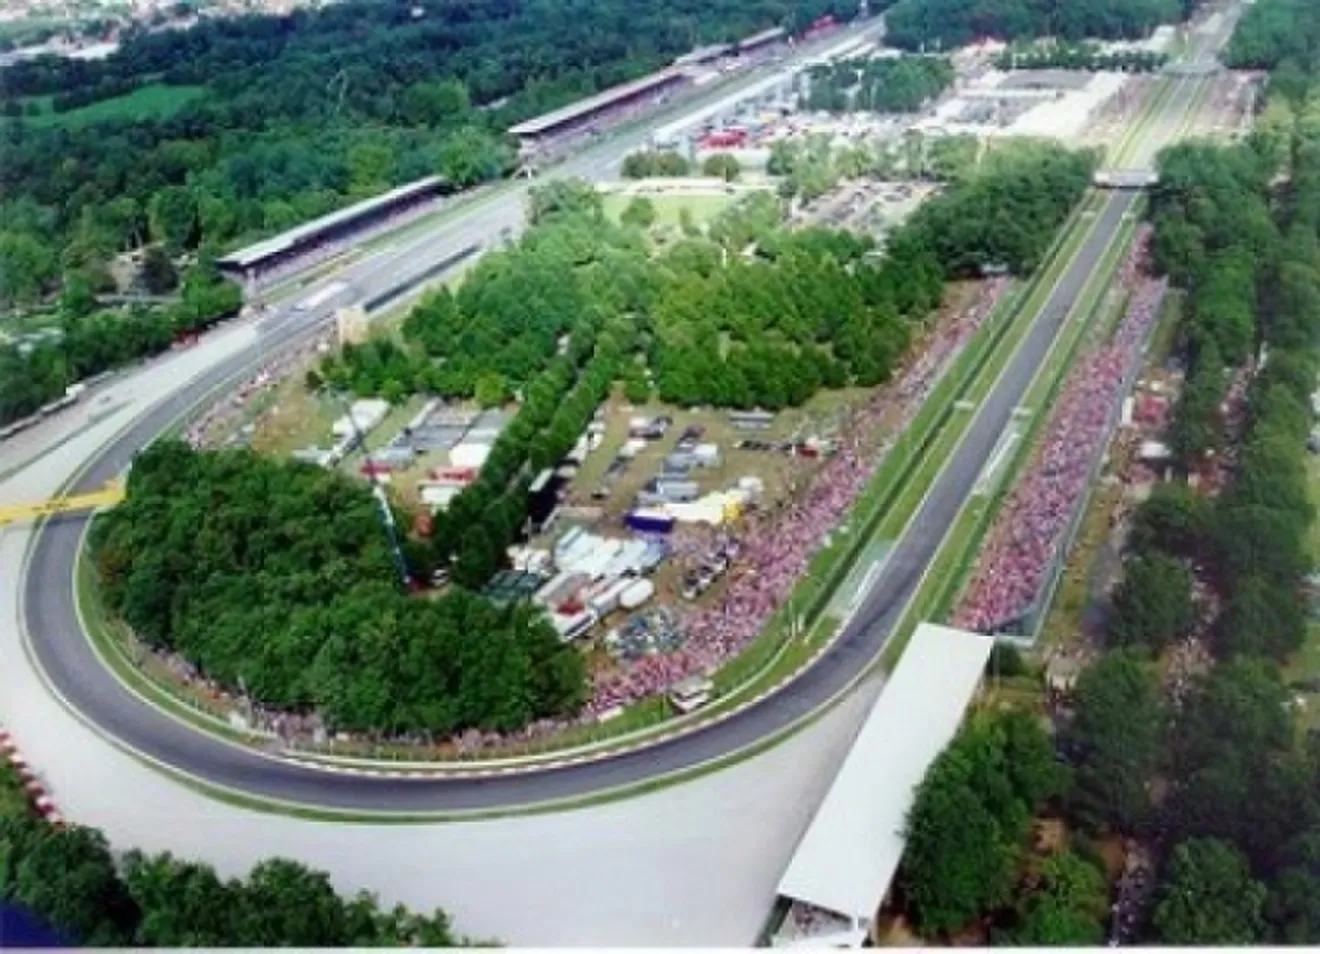 Monza con nuevo contrato hasta 2016